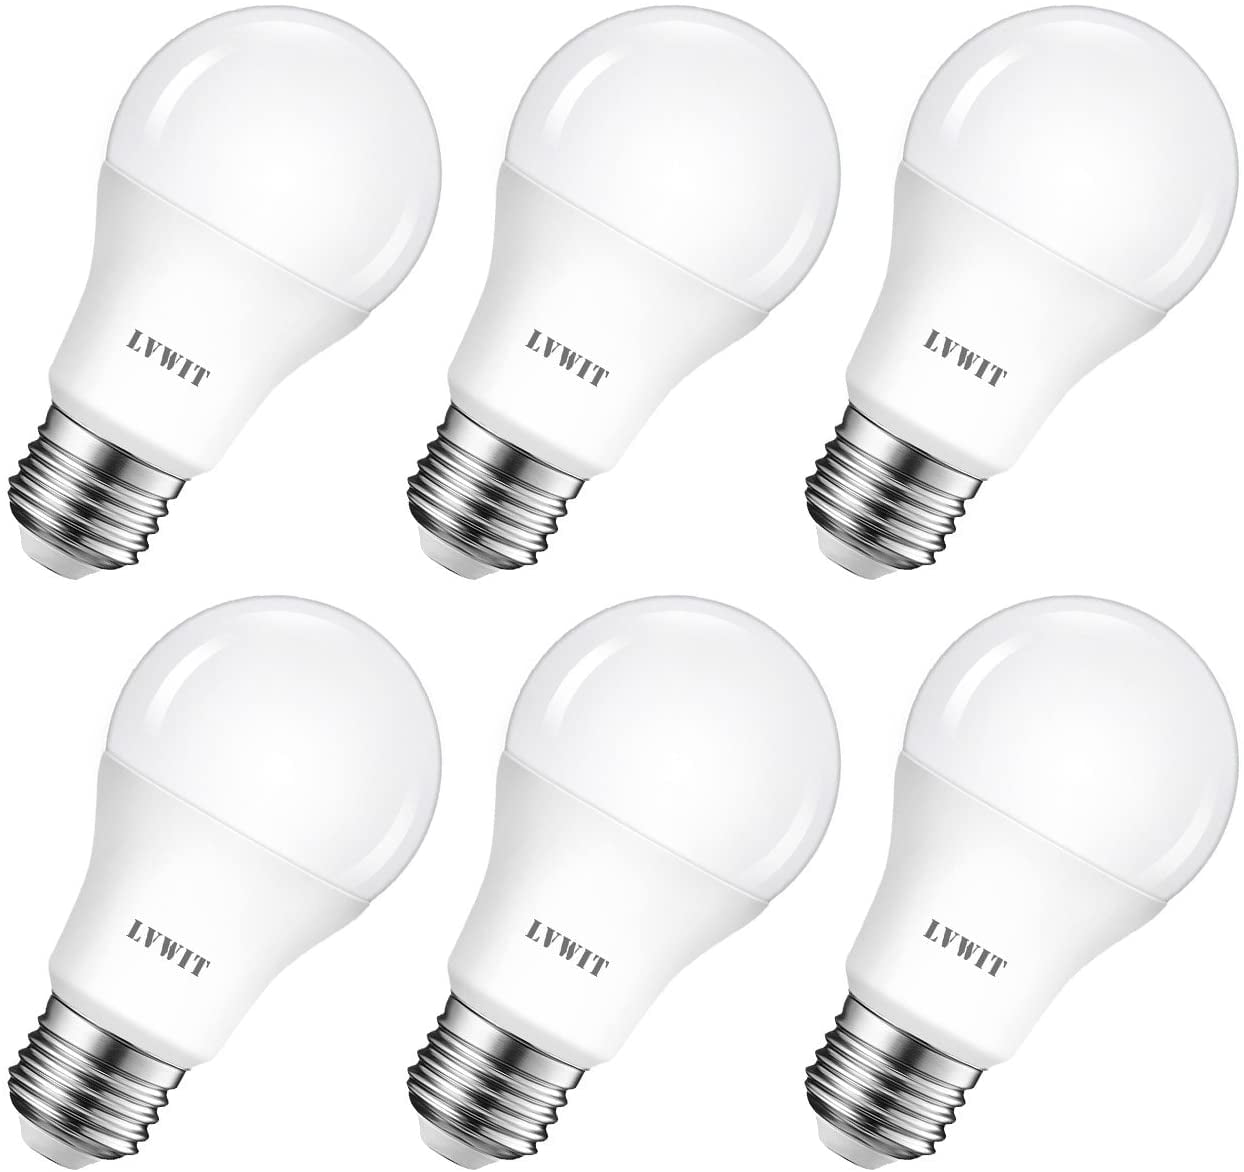 Pack of 6 10 Watt A60 E27 LED Bulbs 60 Watt Incandescent Bulbs Equivalent 